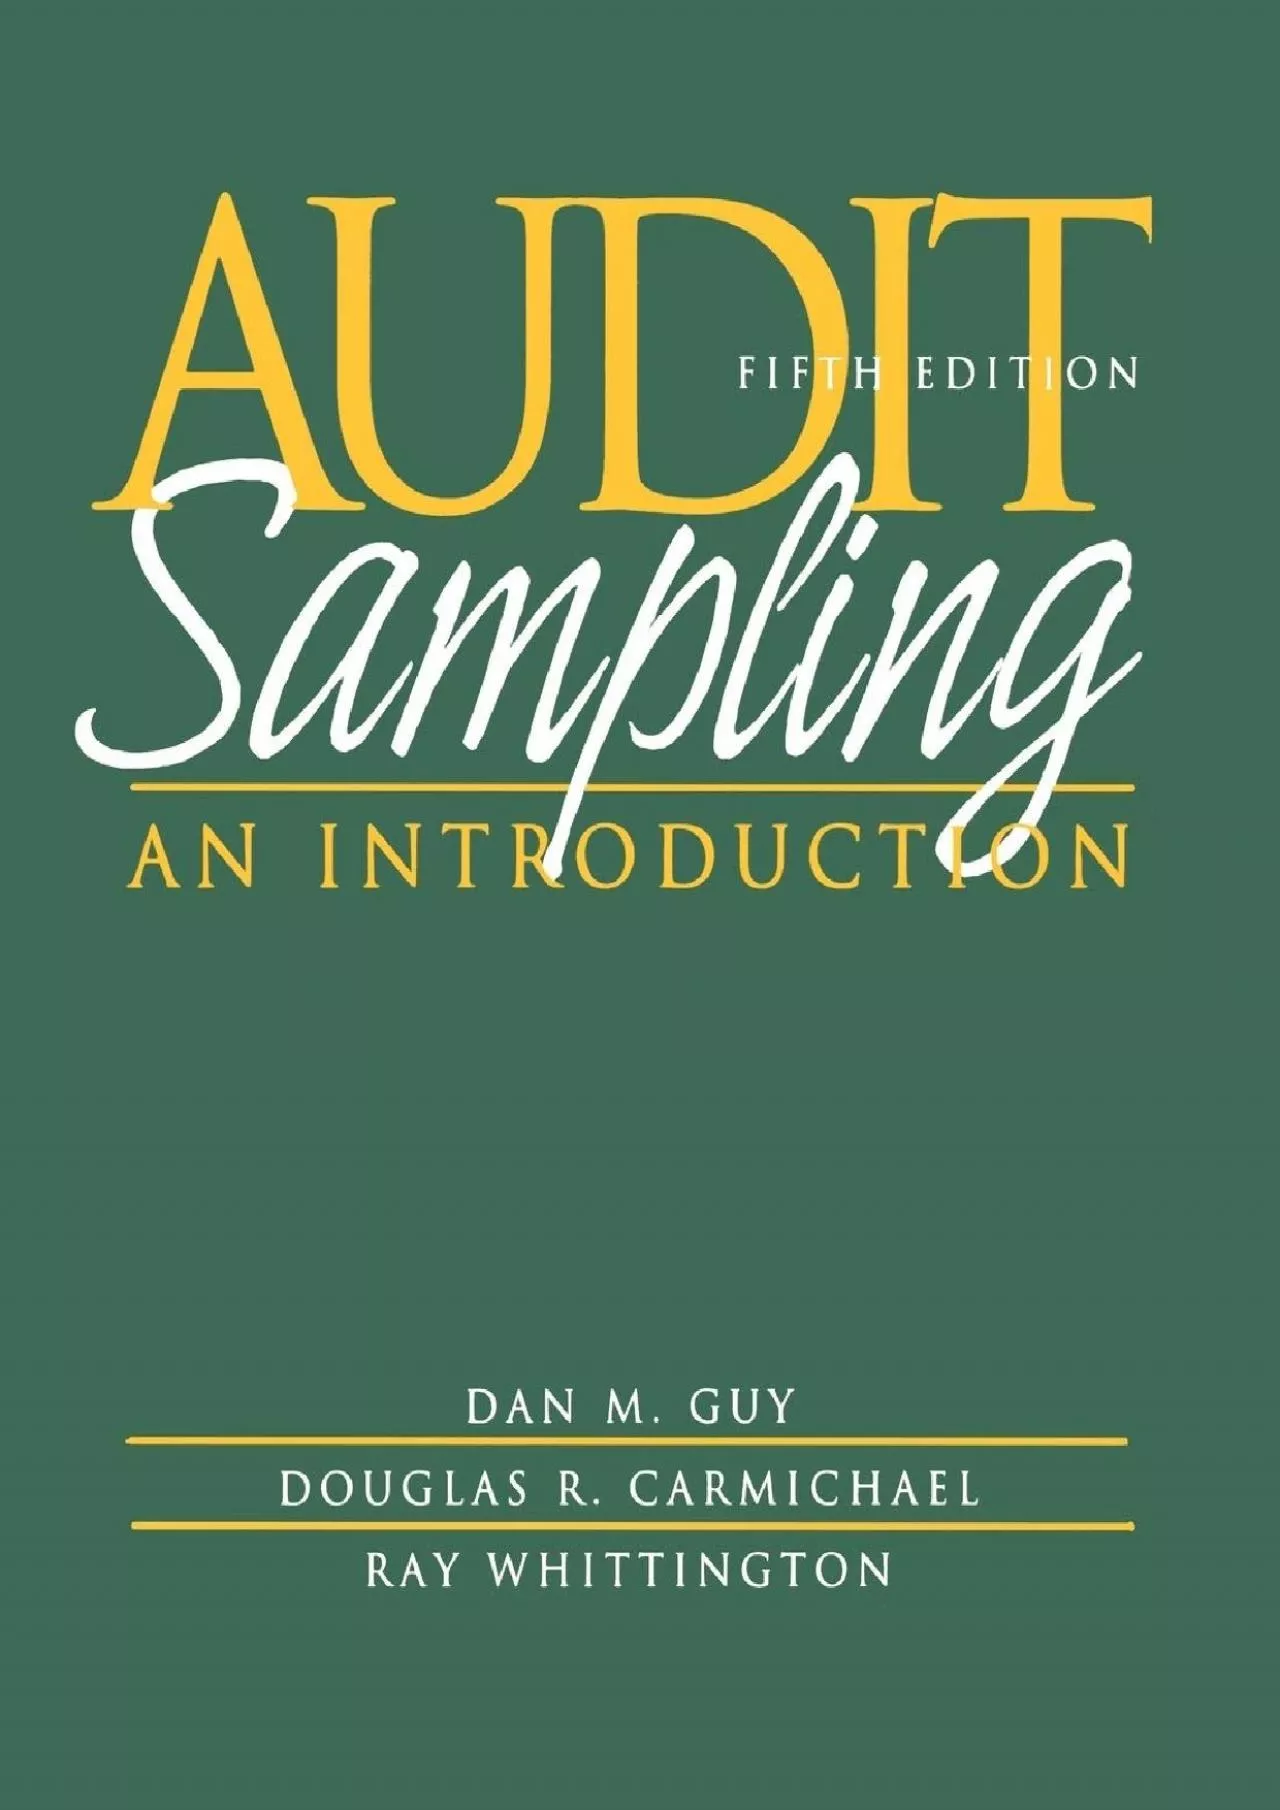 (BOOK)-Audit Sampling: An Introduction to Statistical Sampling in Auditing